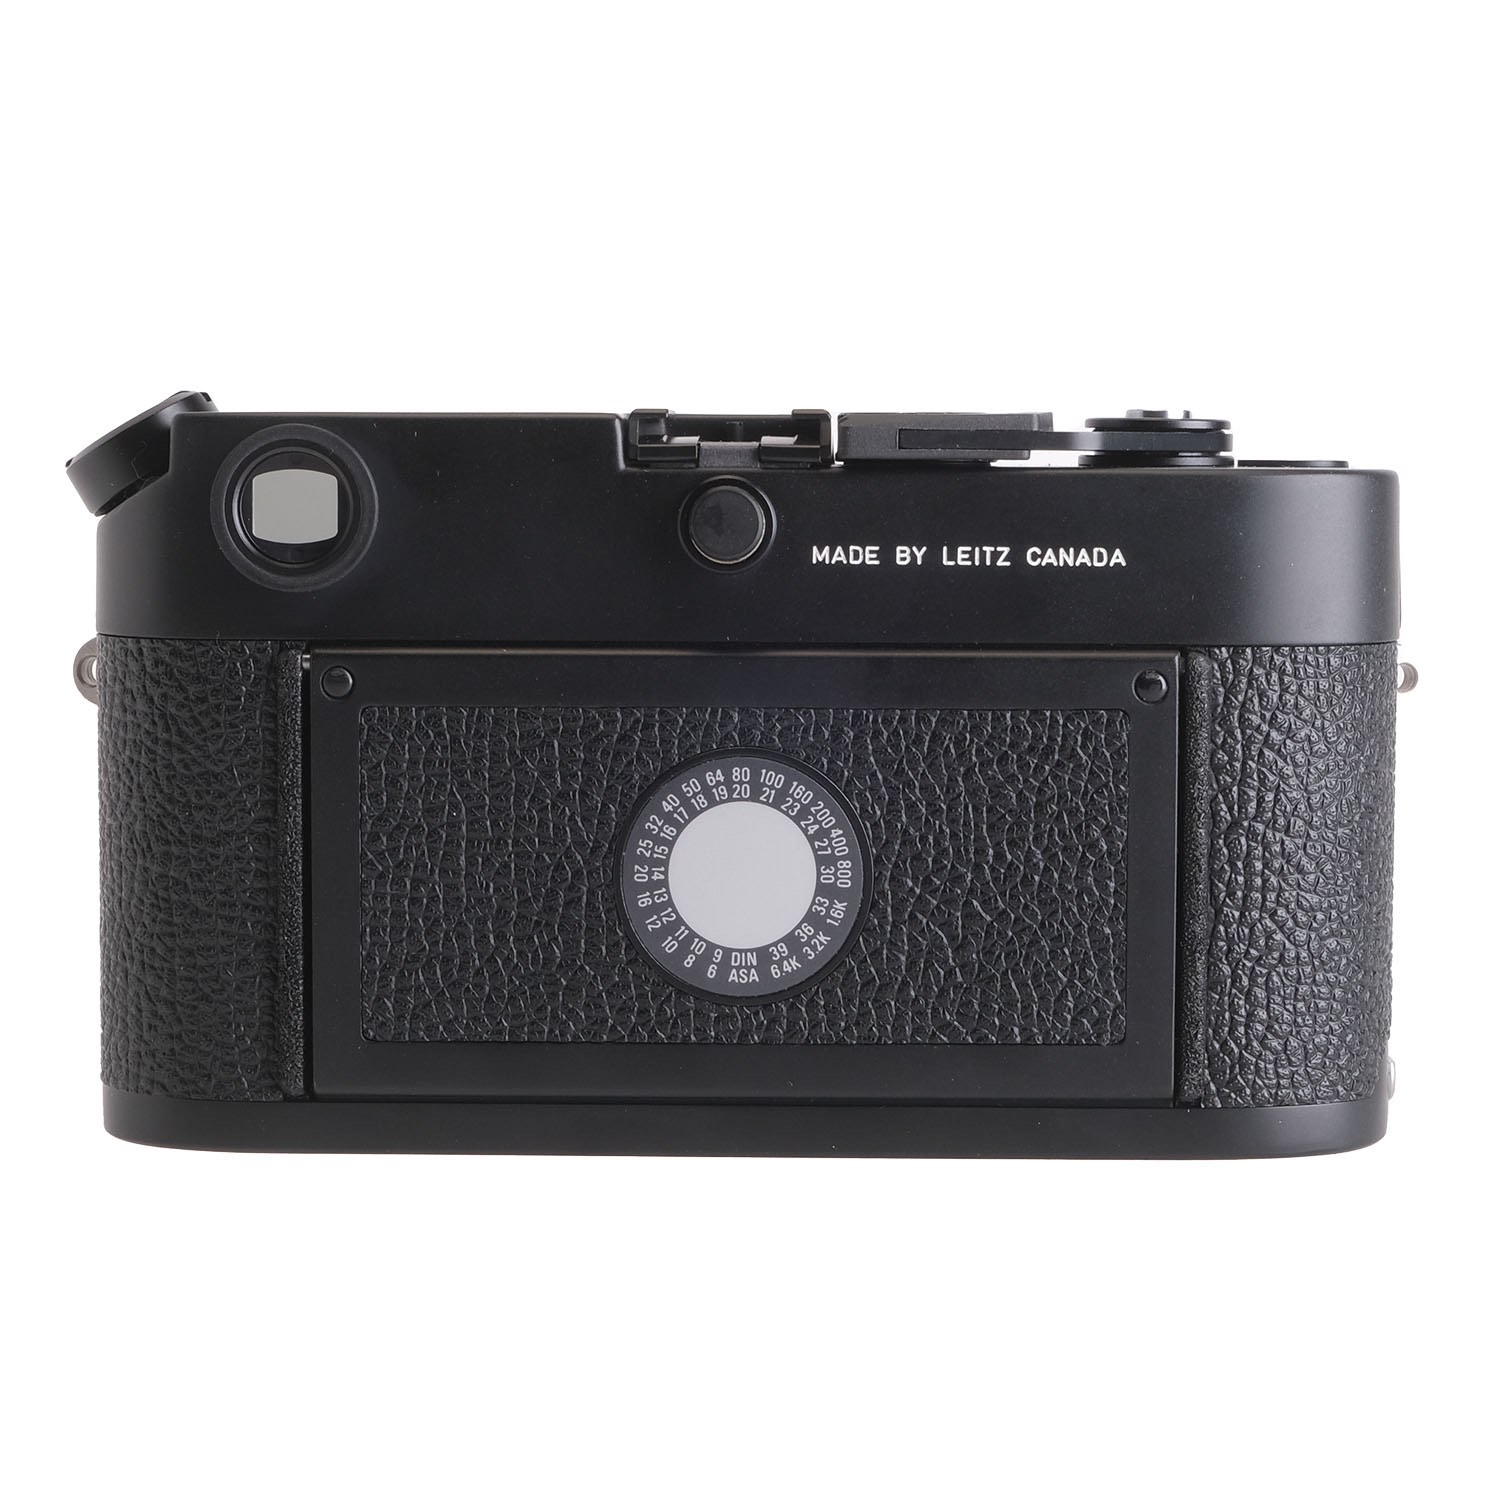 Leica M4-P Black, Boxed 1692069